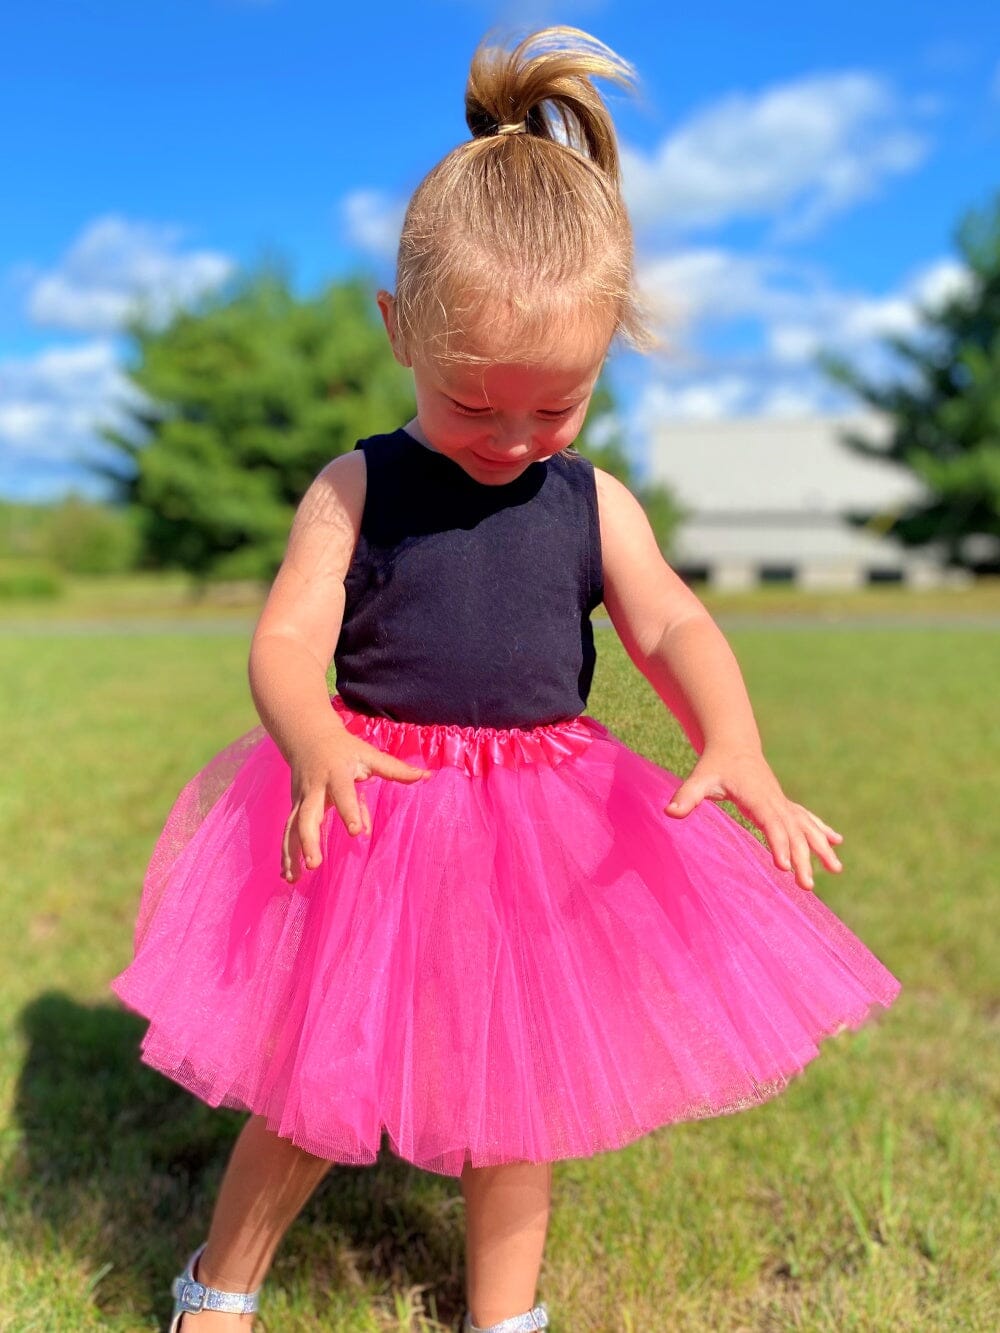 Neon Pink Tutu Skirt - Kids Size 3-Layer Tulle Basic Ballet Dance Costume  Tutus for Girls